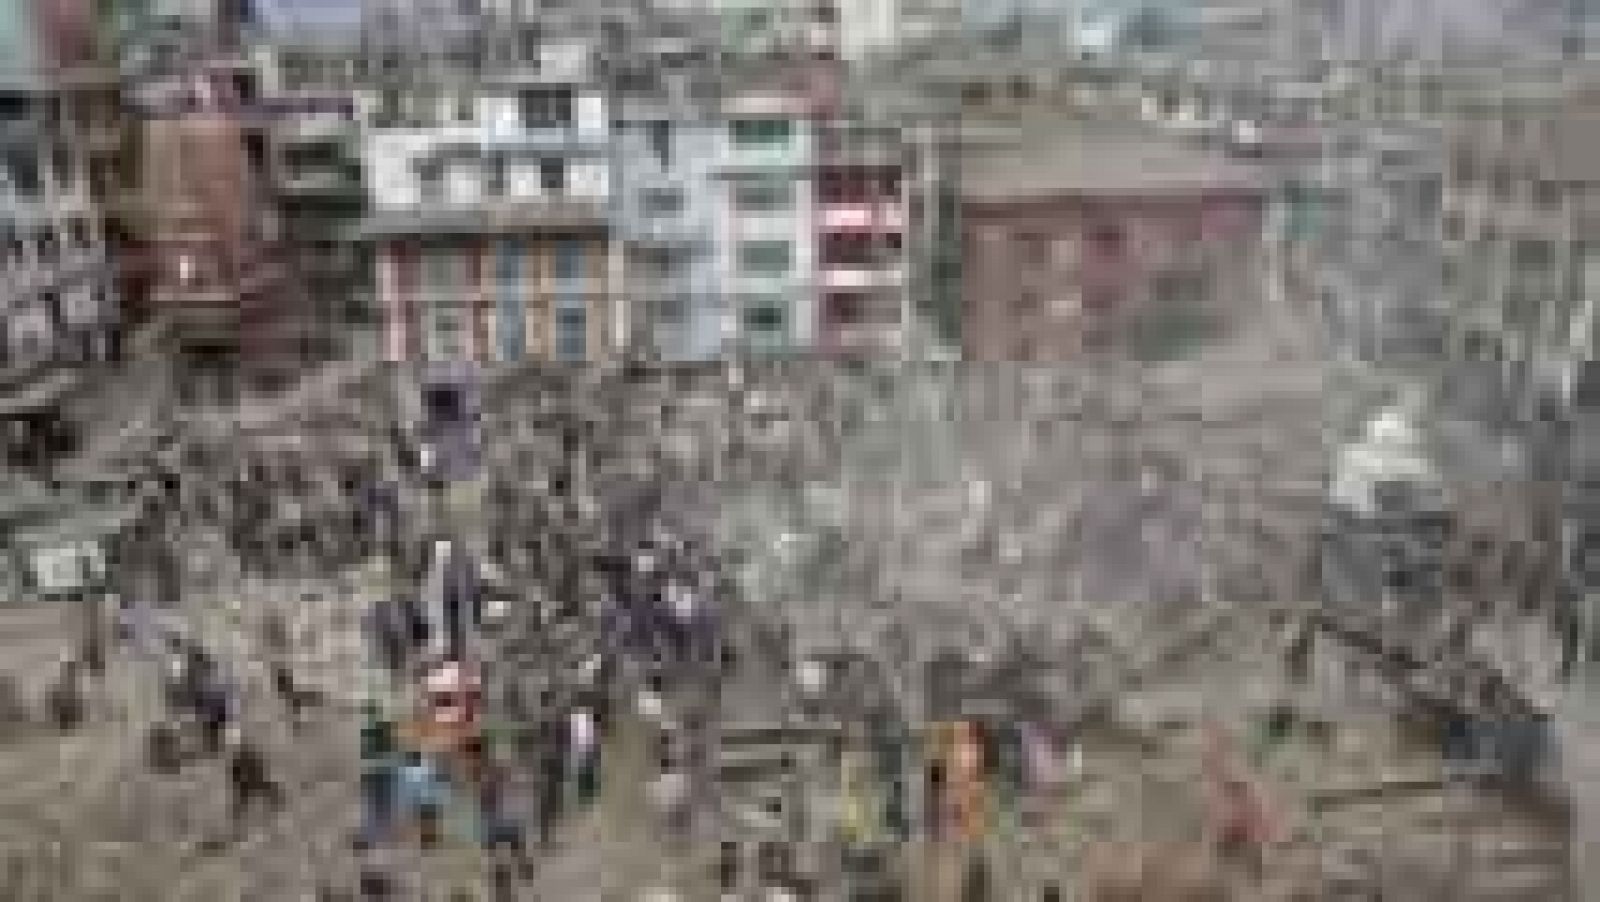 Exteriores continúa buscando a los españoles desaparecidos en Nepal